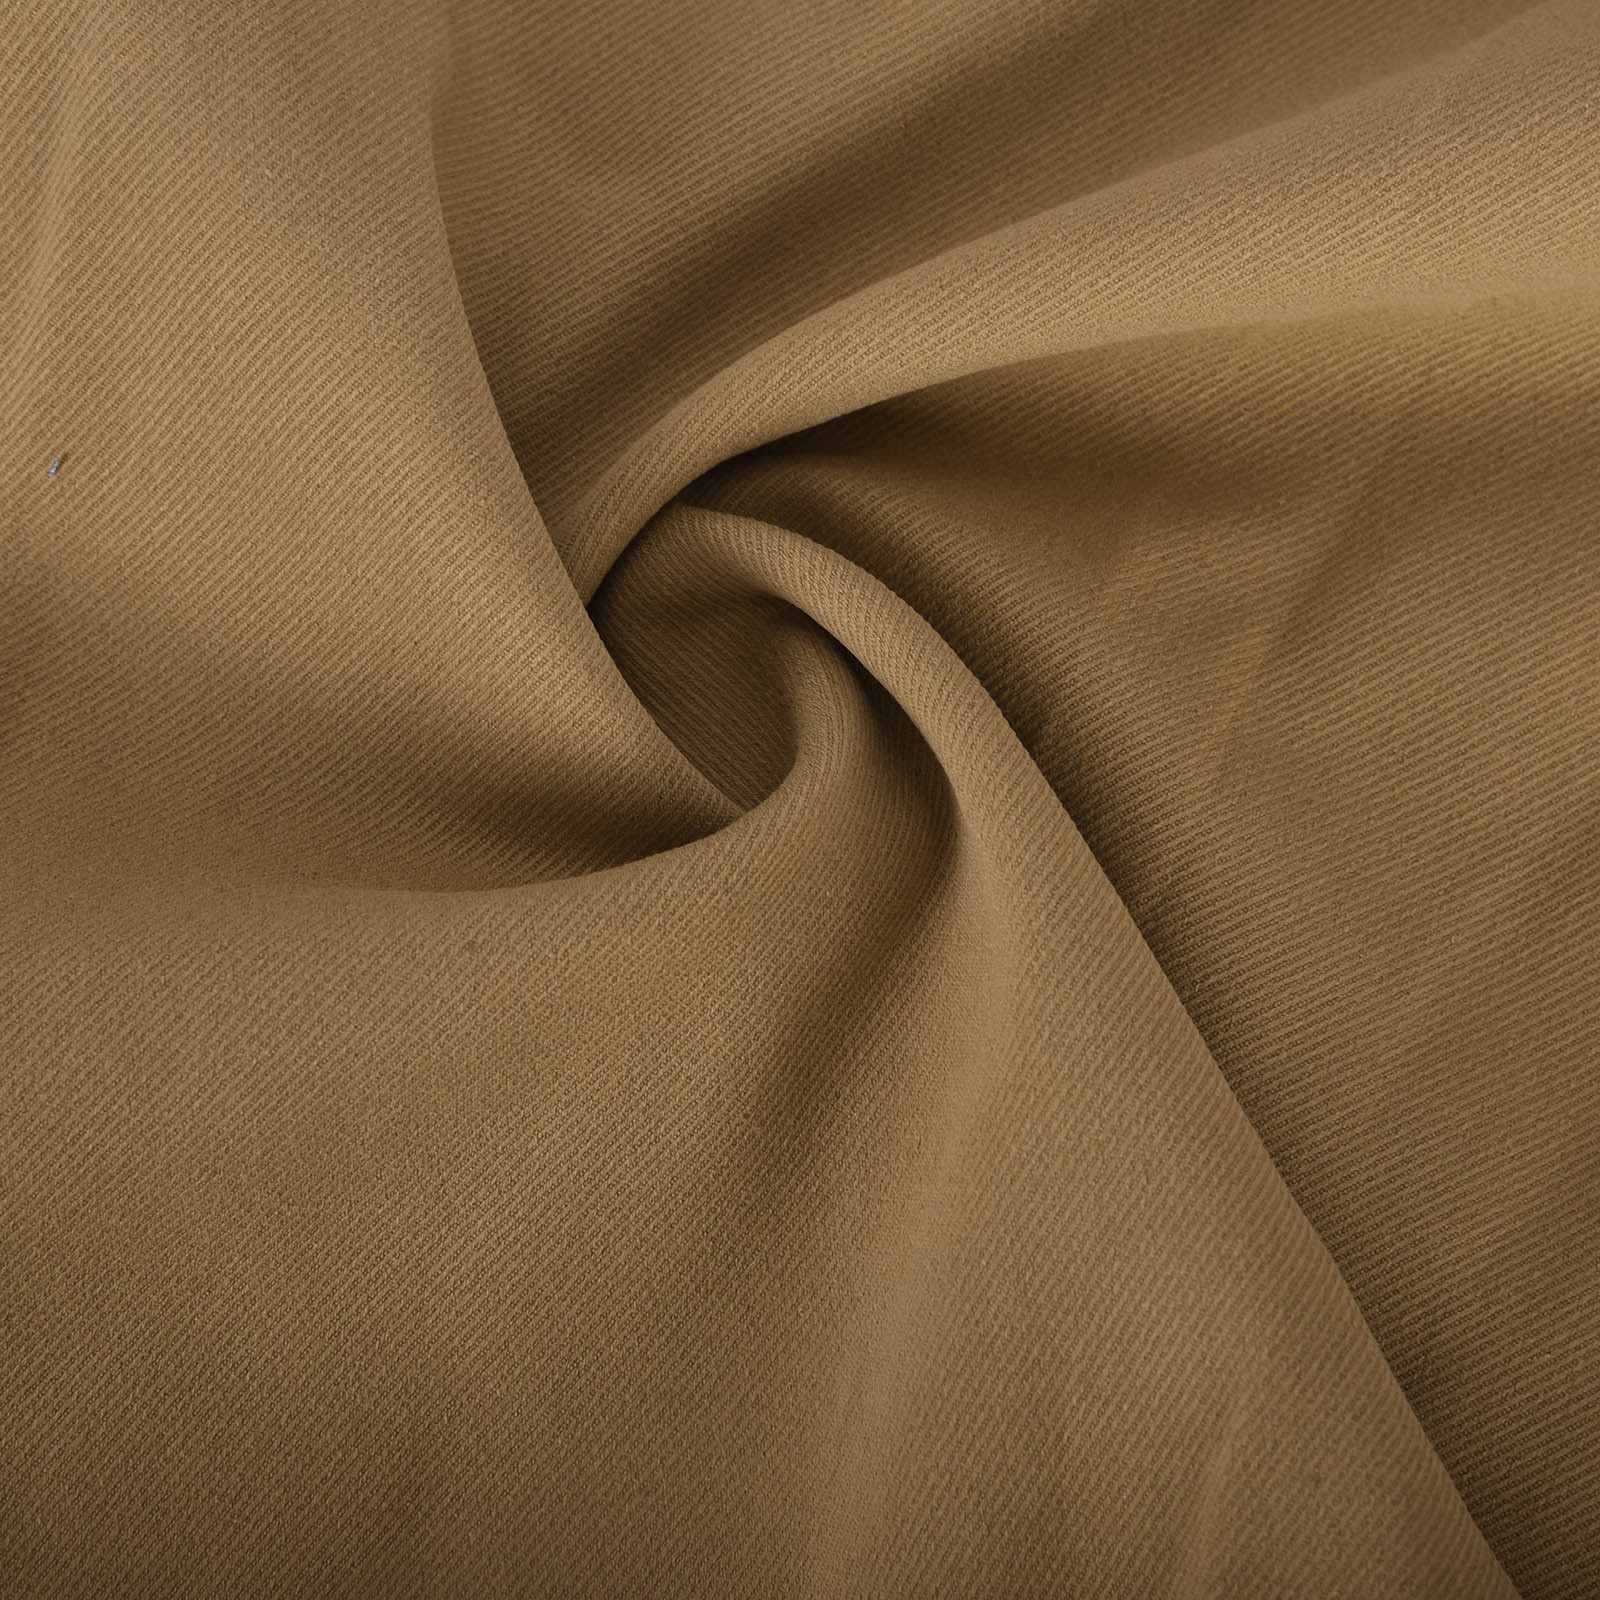 Tdoqot Chinos Pants Men- Drawstring Comftable Elastic Waist Slim Casual Cotton Mens Pants Khaki - image 4 of 6